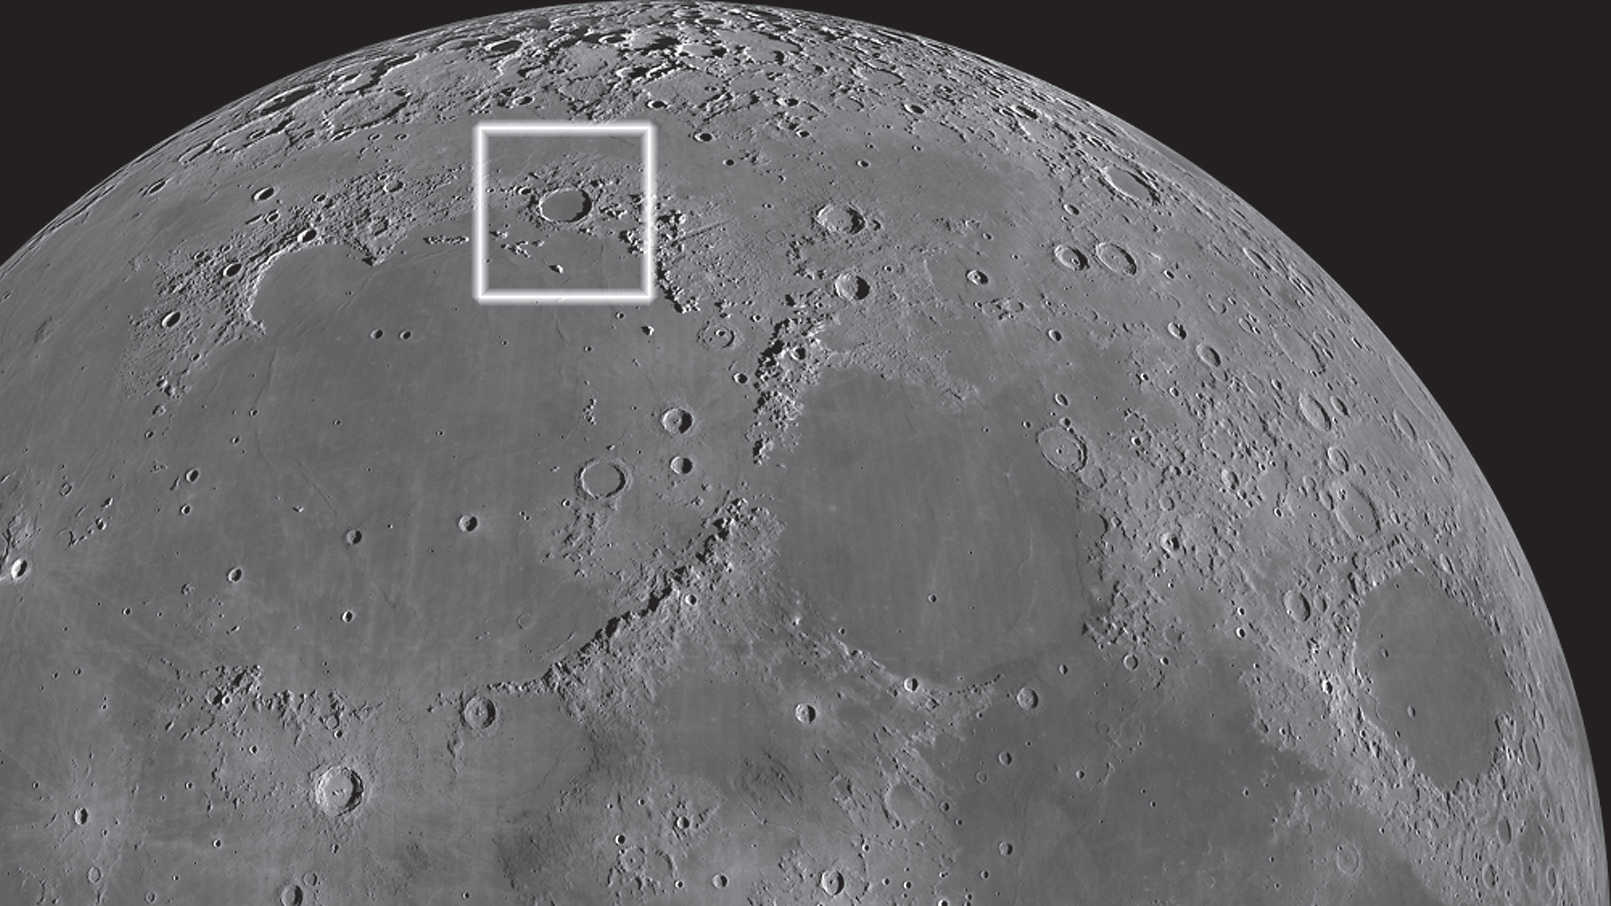 Plato, the dark impact crater, lies at the northern edge of Mare Imbrium. NASA/GSFC/Arizona State University